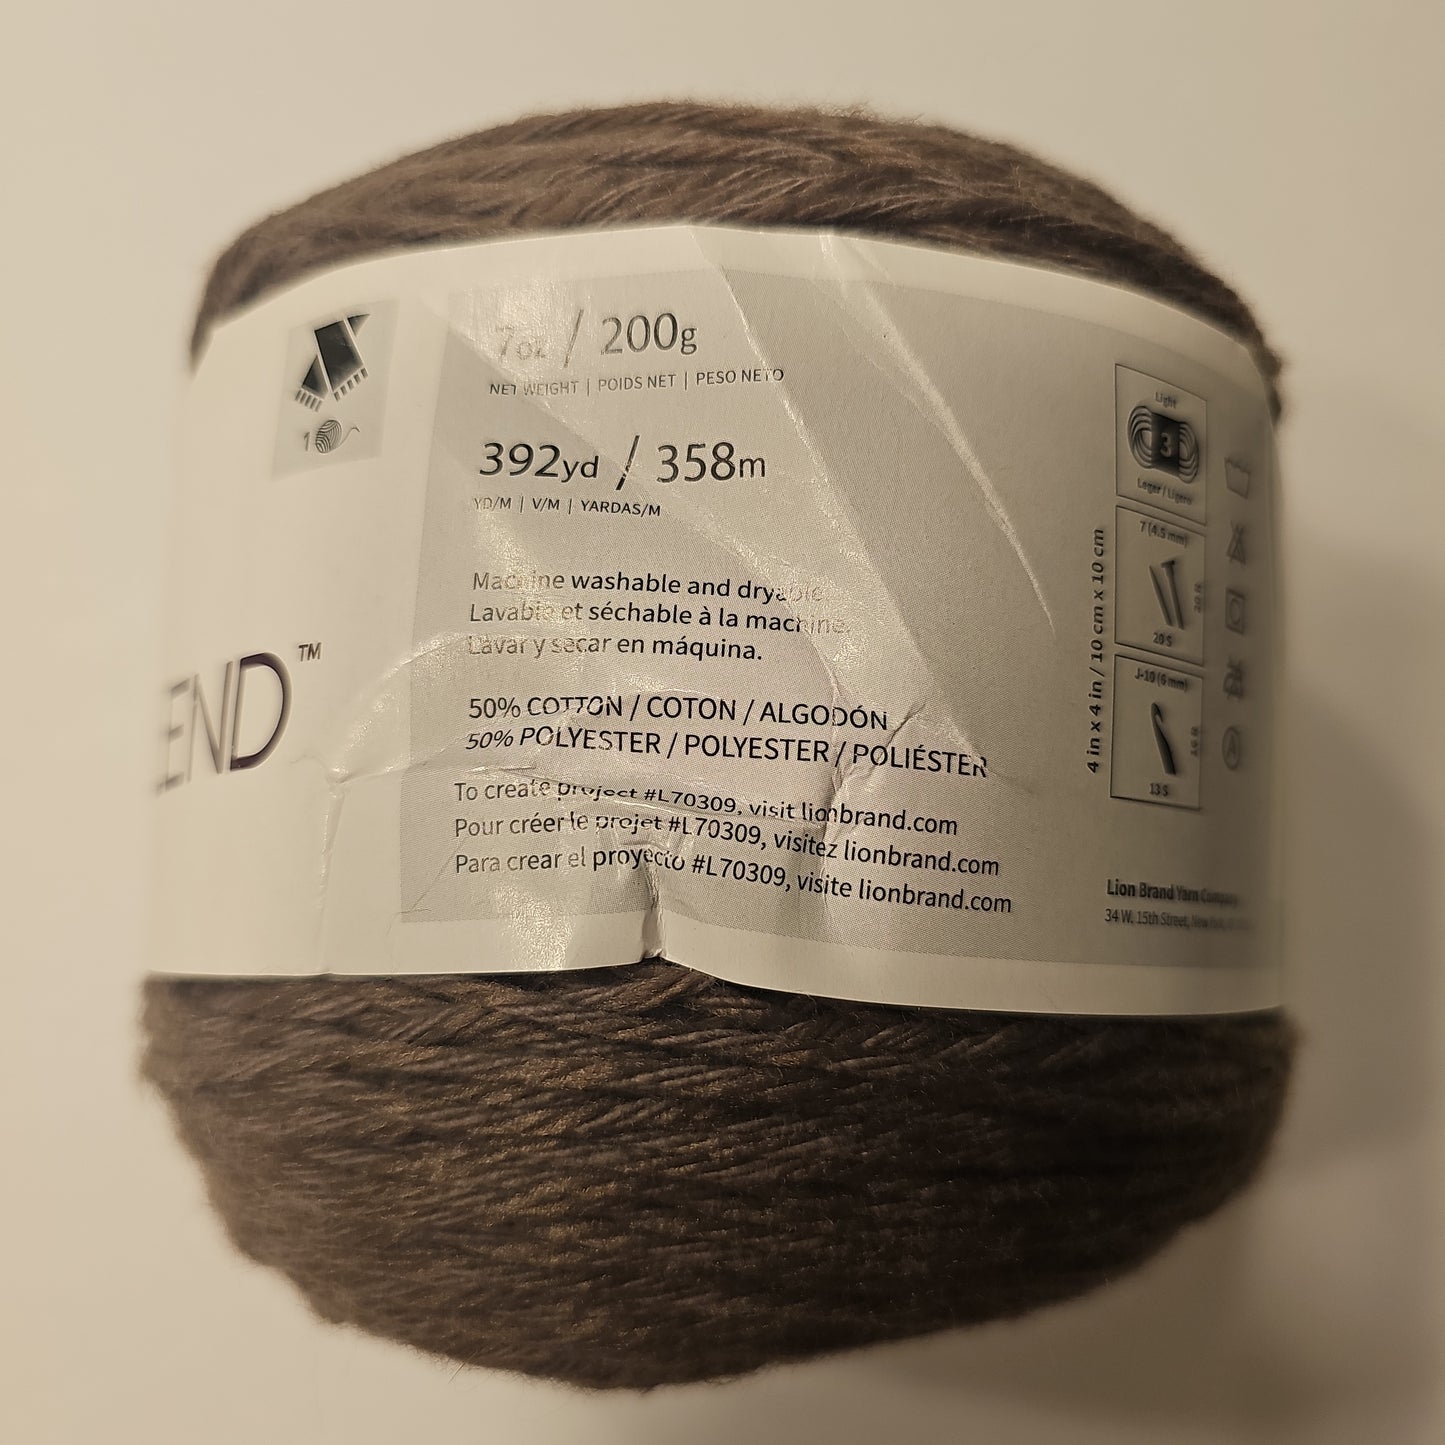 Lion Brand Cozy Cotton Blend Mochaccino Yarn